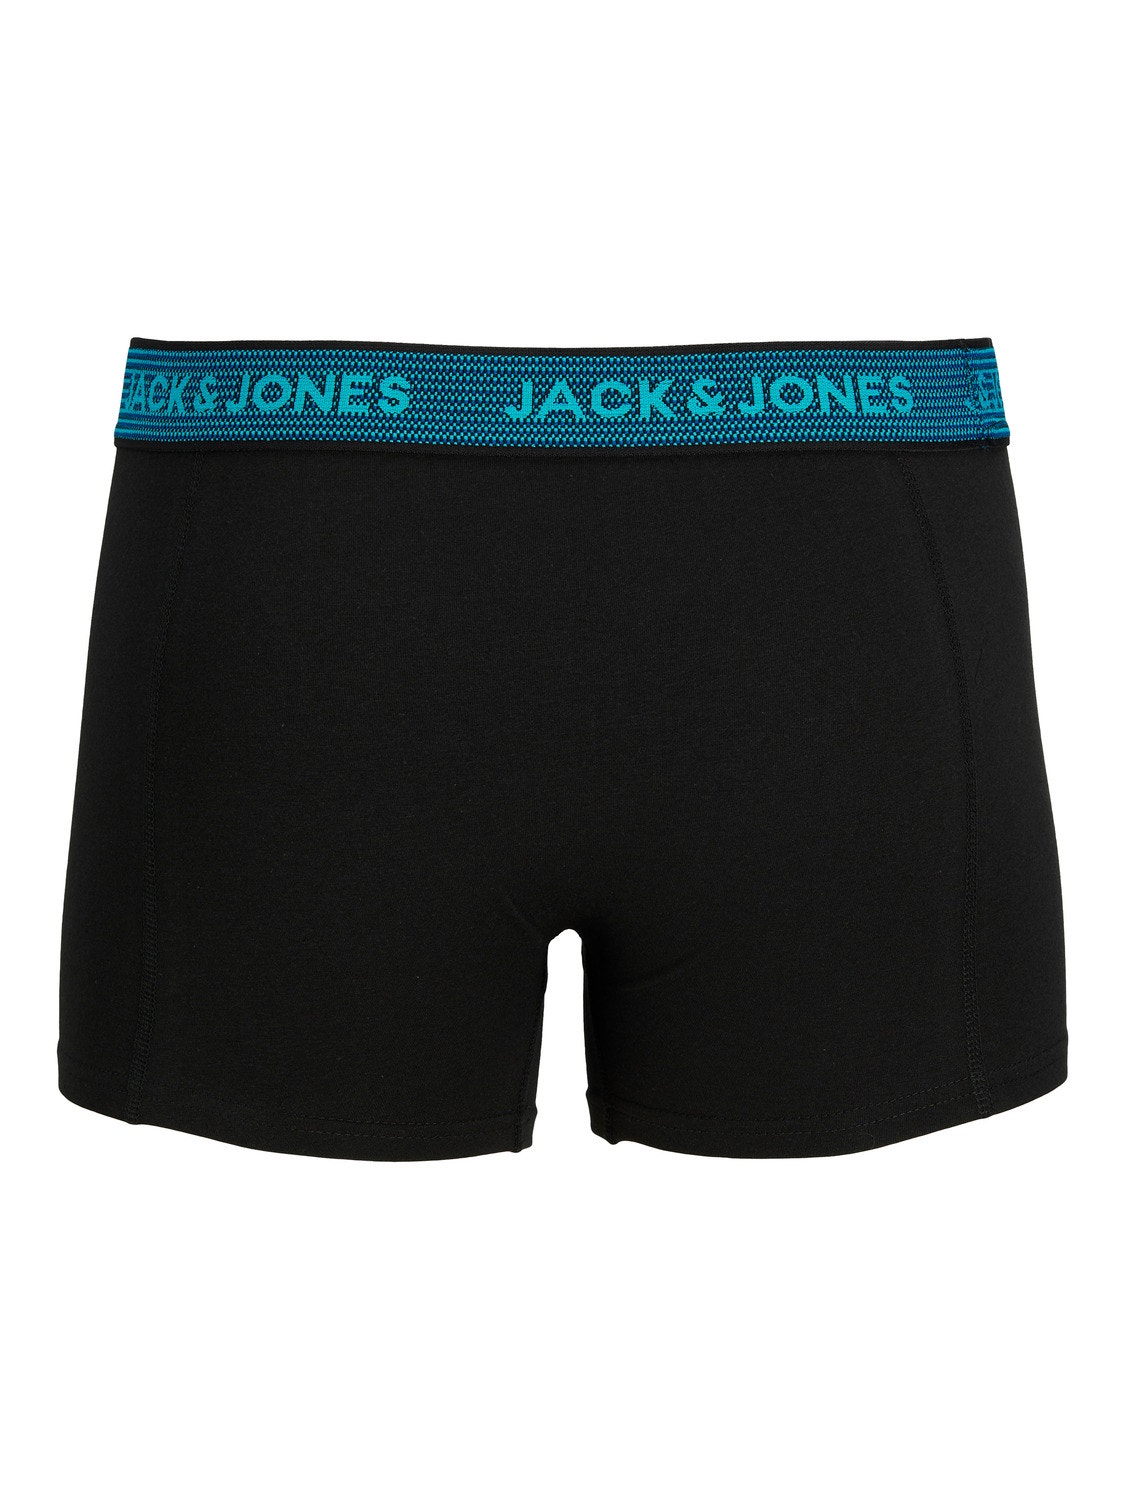 Jack & Jones Confezione da 3 Boxer -Asphalt - 12127816